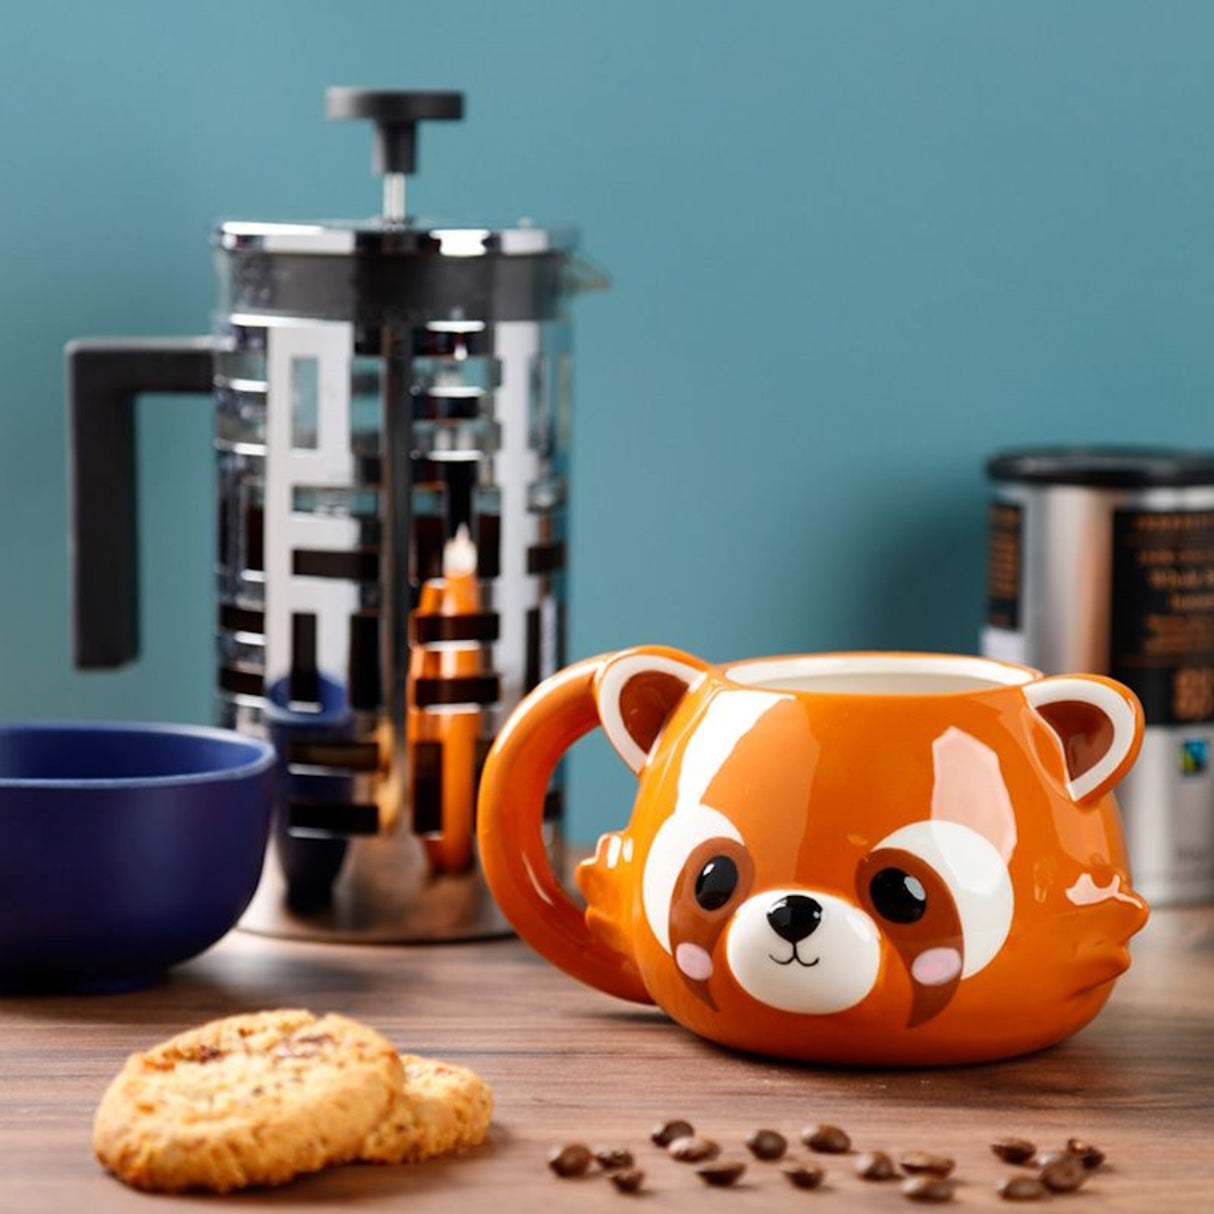 Kindertasse Roter Panda Kaffeebecher Tasse aus Keramik